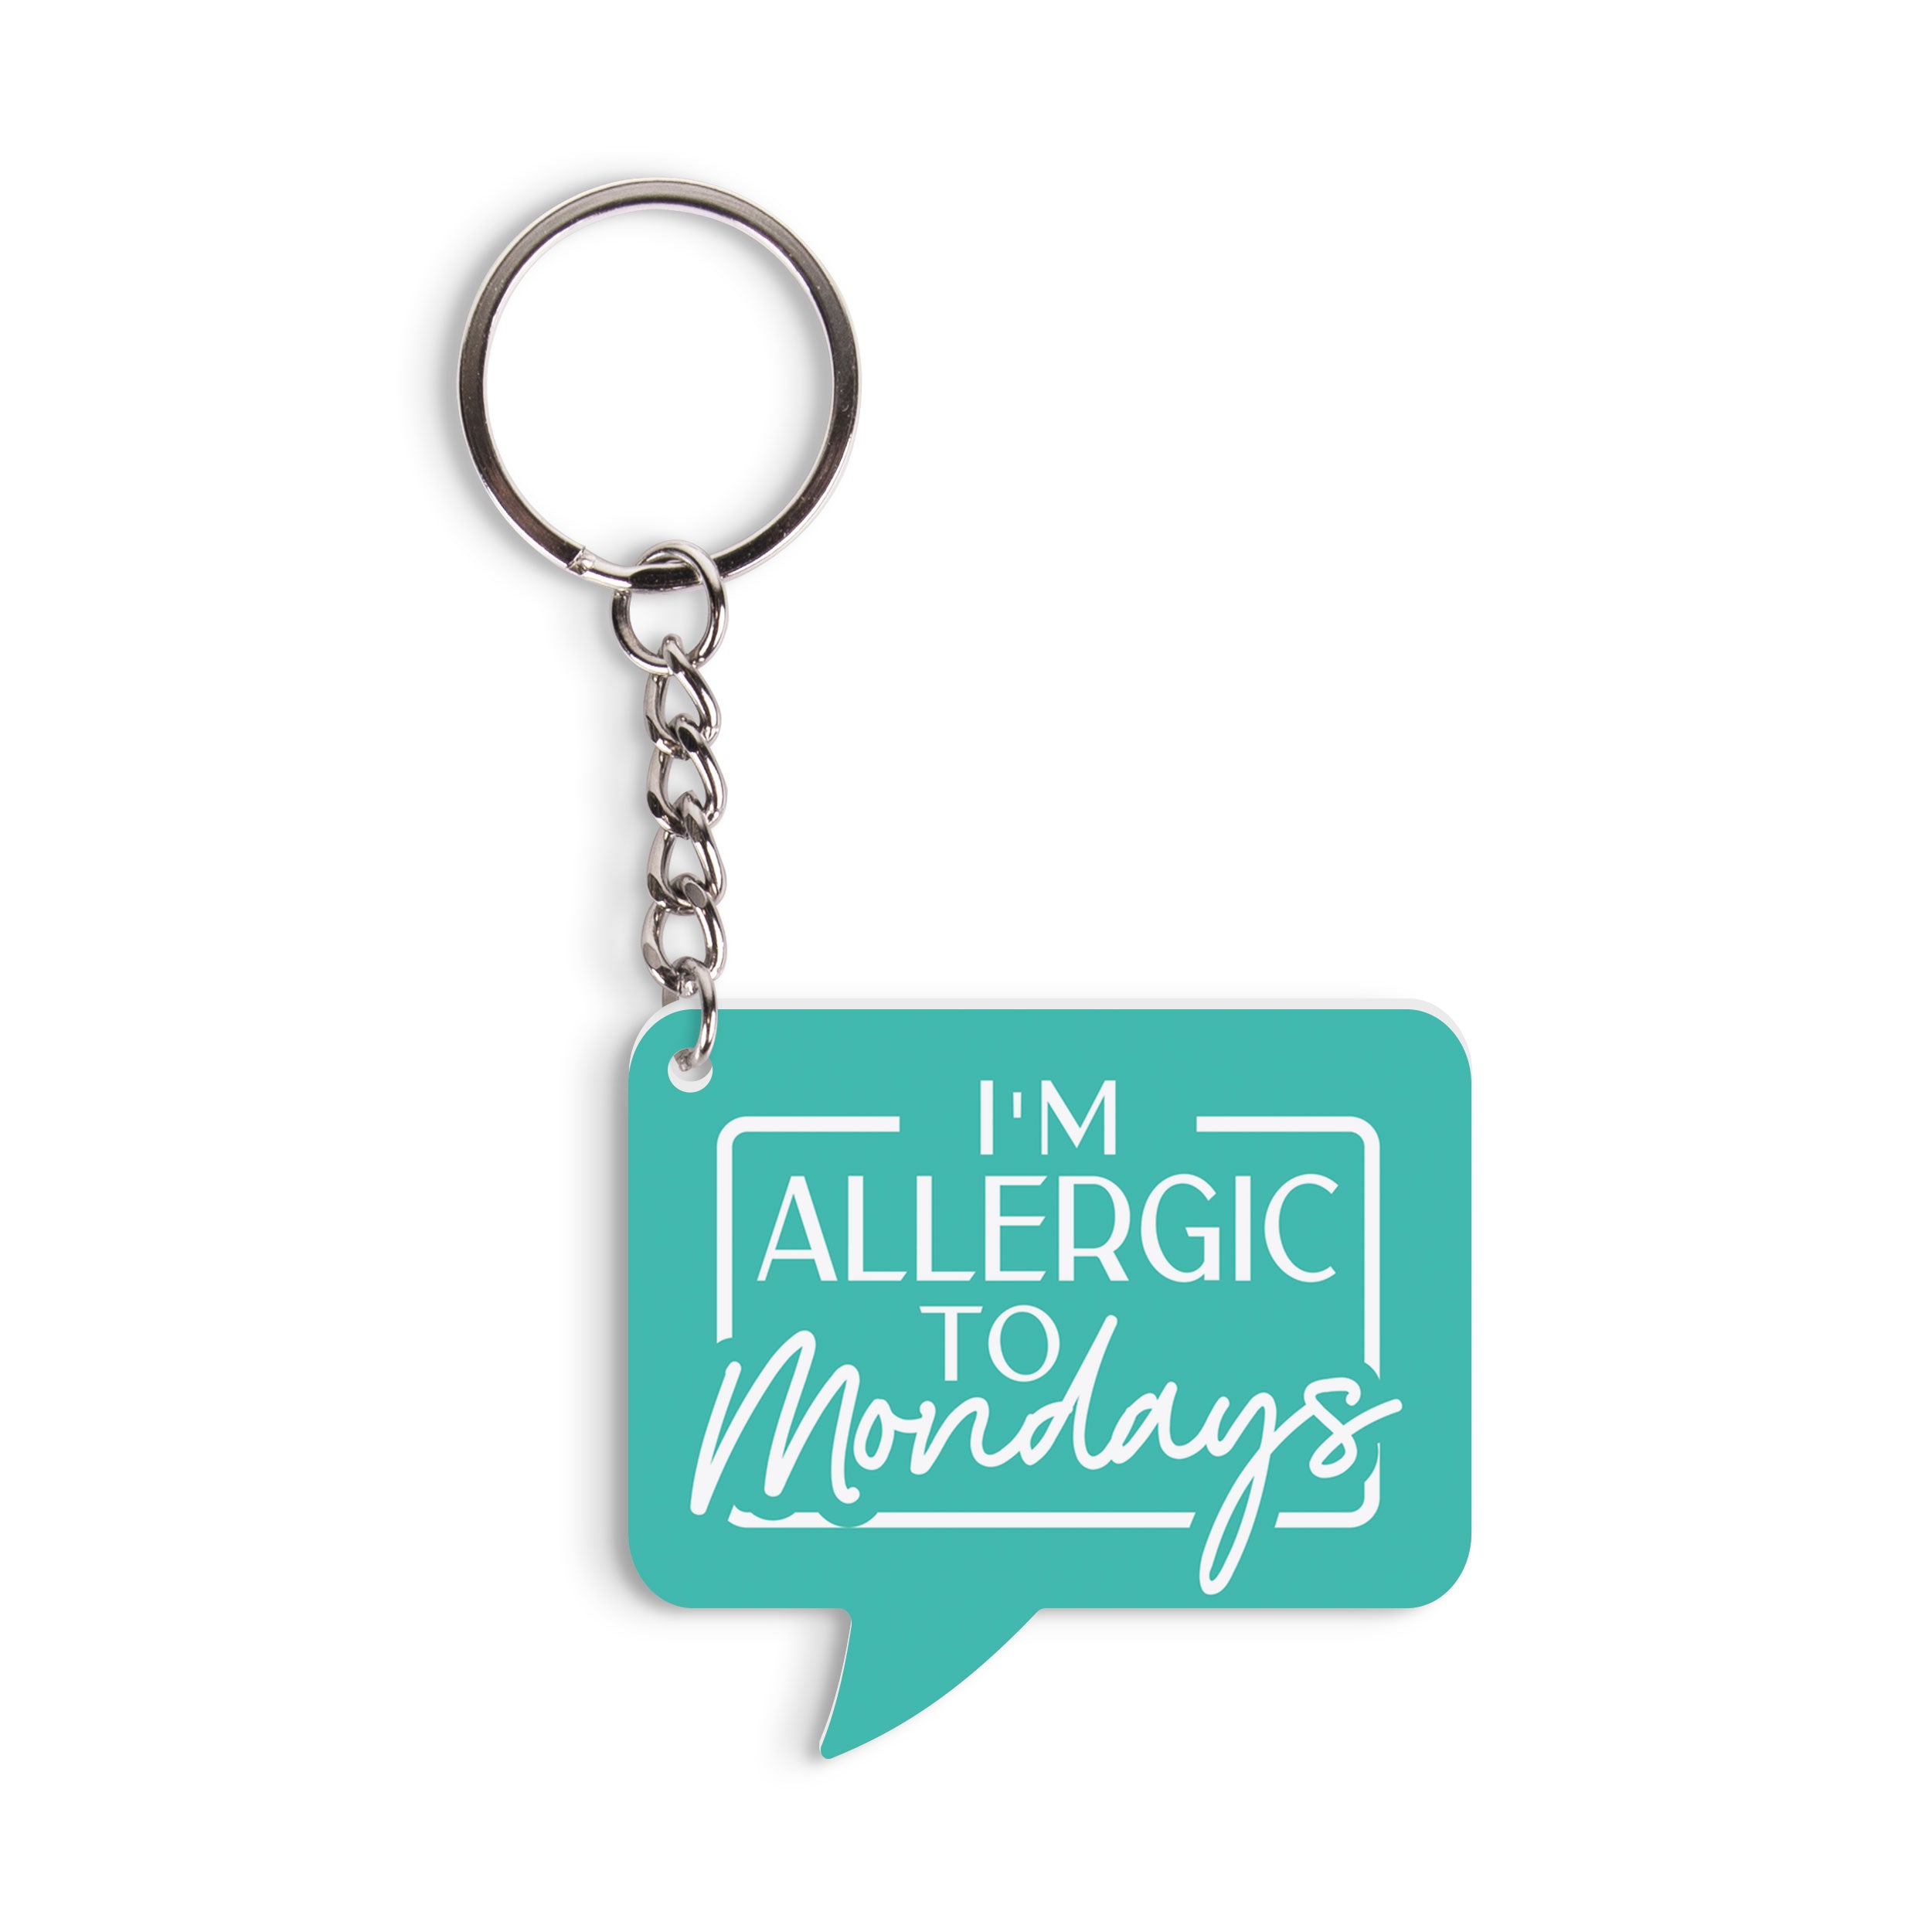 I'm Allergic To Mondays Key Chain